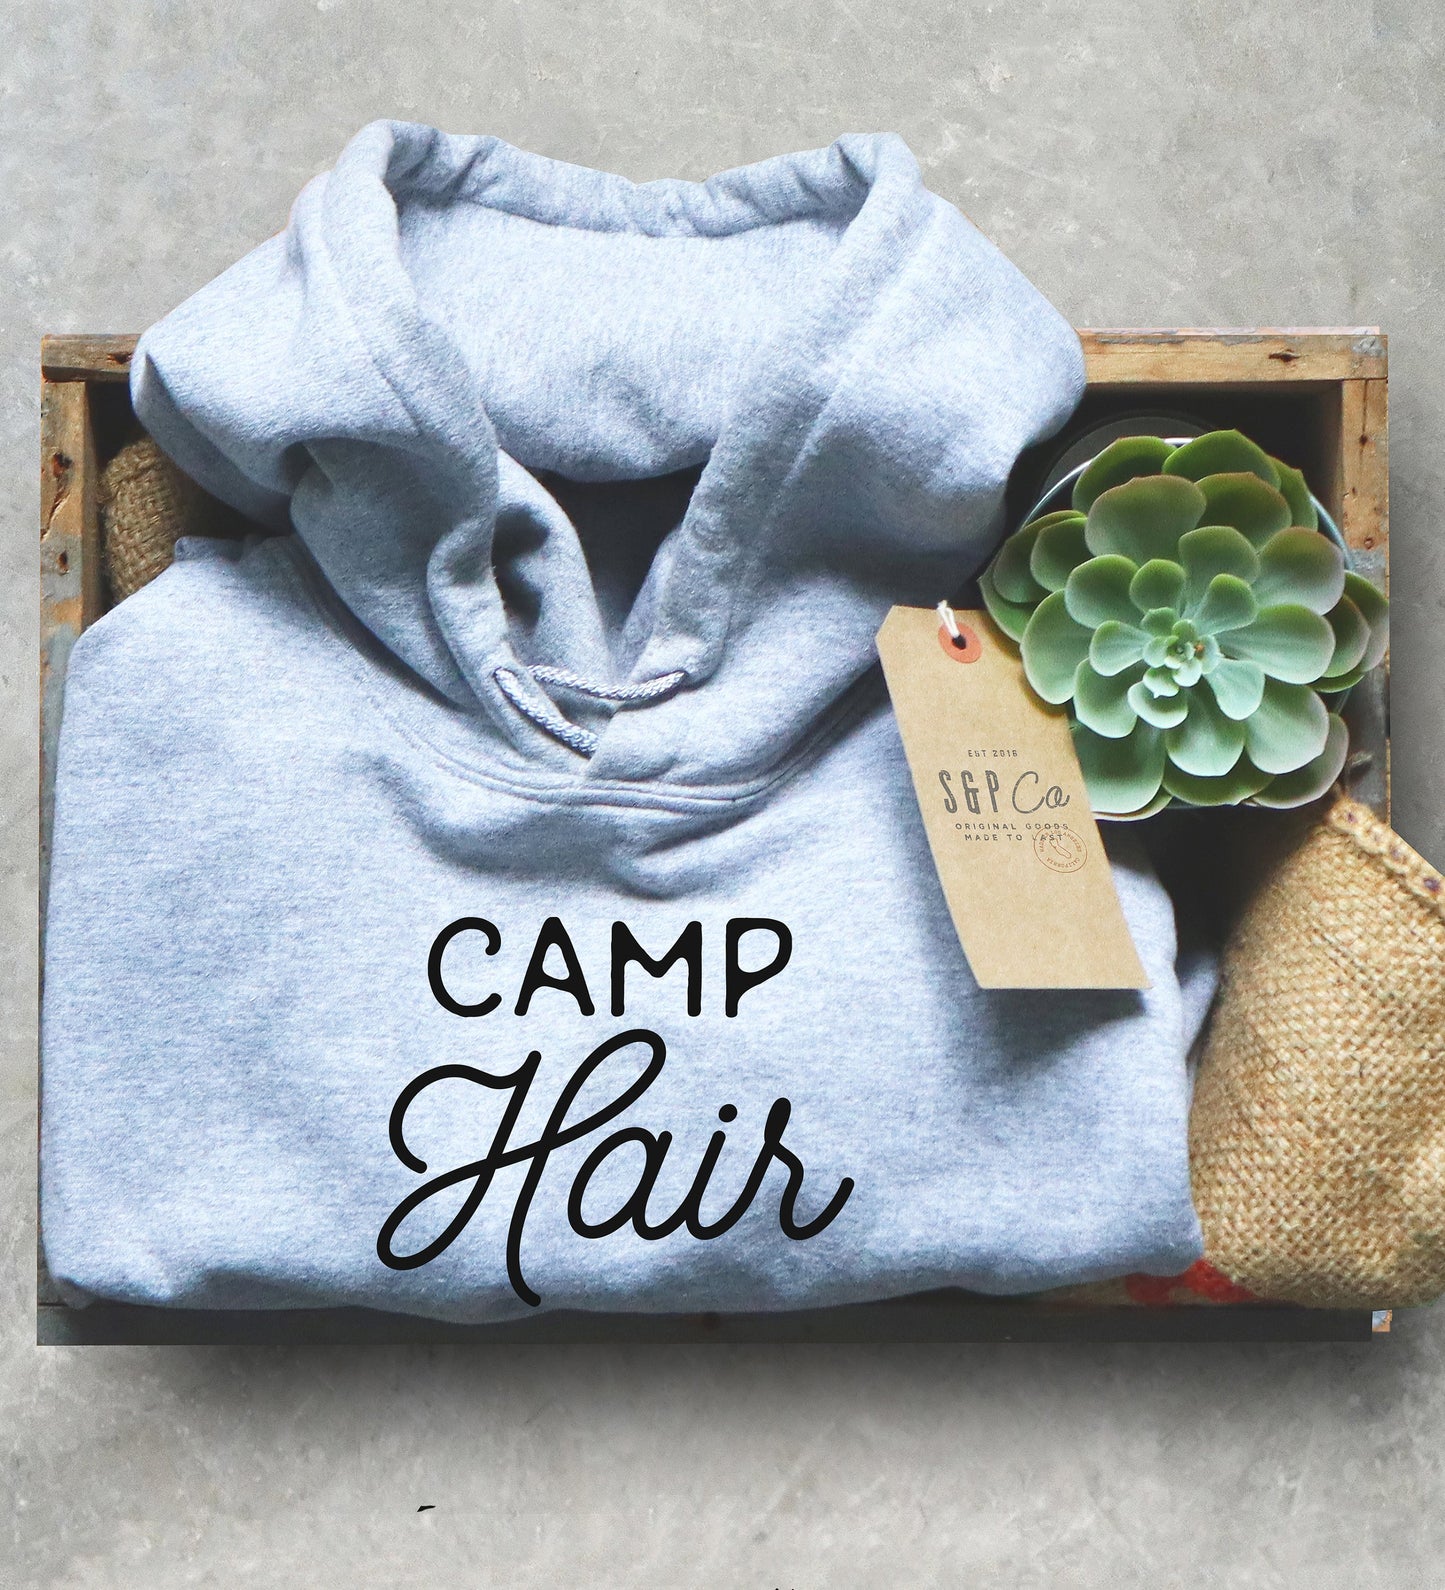 Camp Hair Don't Care Hoodie - Camping shirt, Camping Hoodie, Happy camper shirt, Happy camper, Camping, Hiking shirt, Camping gift